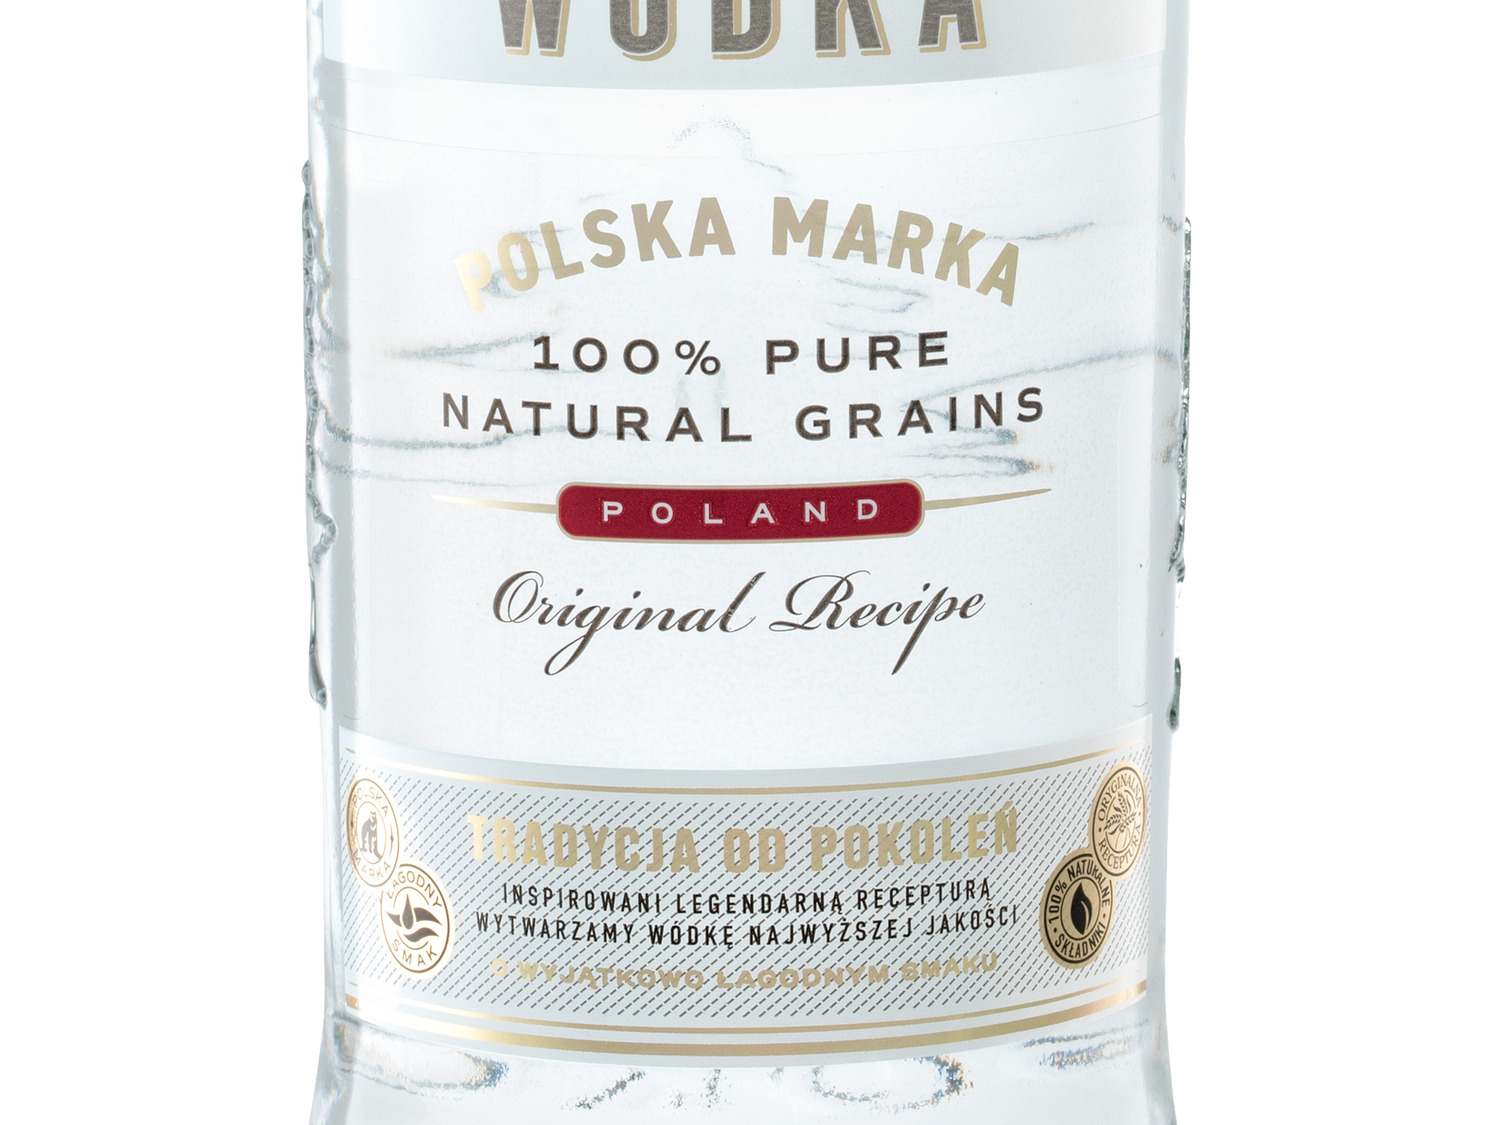 Krupnik Premium Poland Wodka 40% | LIDL Vol